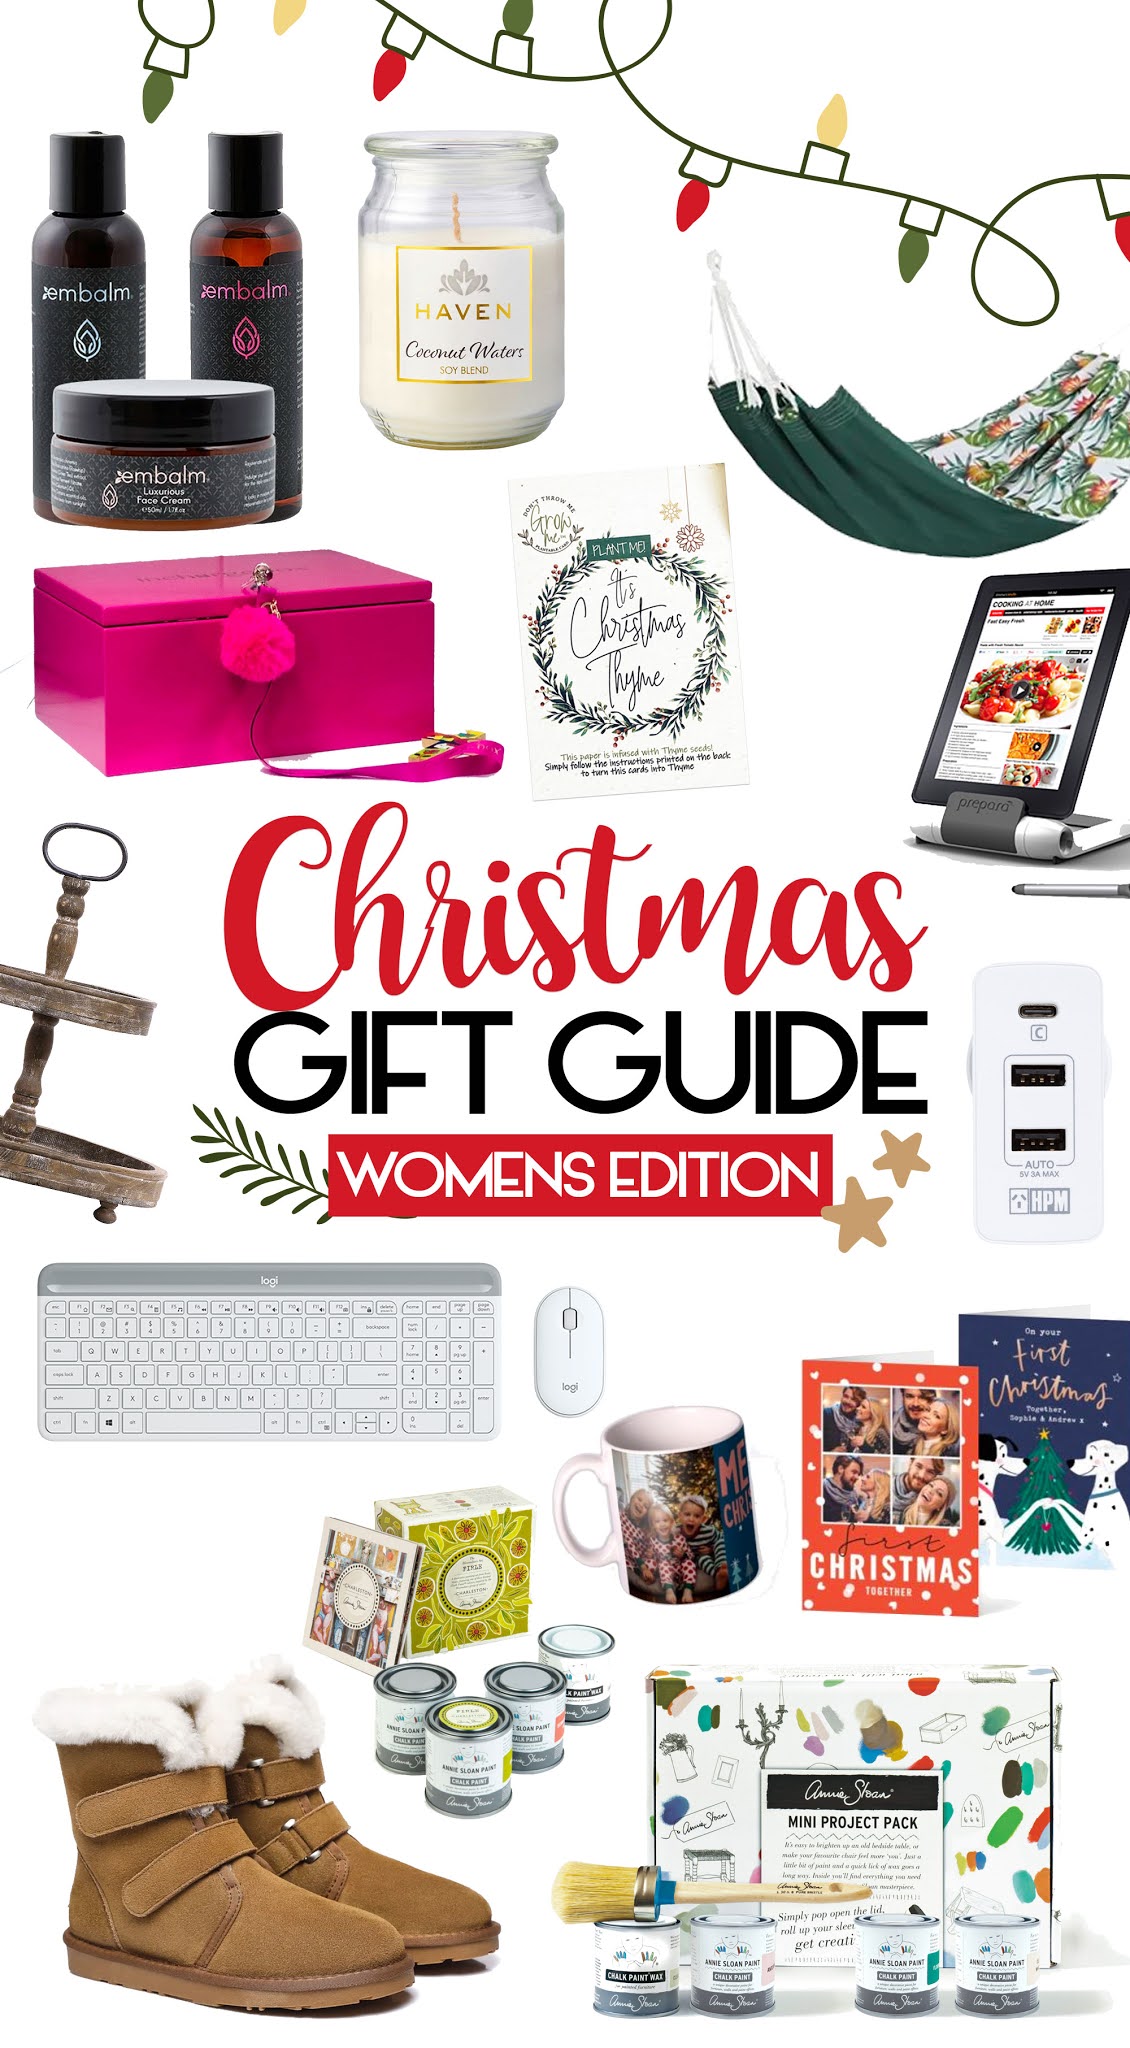 https://1.bp.blogspot.com/-jG6BF61Zlv8/X6yepBik0sI/AAAAAAAAoo0/oB4cfmPNaSY_r4nExOxi8DH6YmaEesUhQCLcBGAsYHQ/s2048/Women%2527s-Christmas-Gift-Guide-2020---Gift-Ideas-for-Women%252C-Wife%252C-Girlfriend%252C-Daughter.jpg